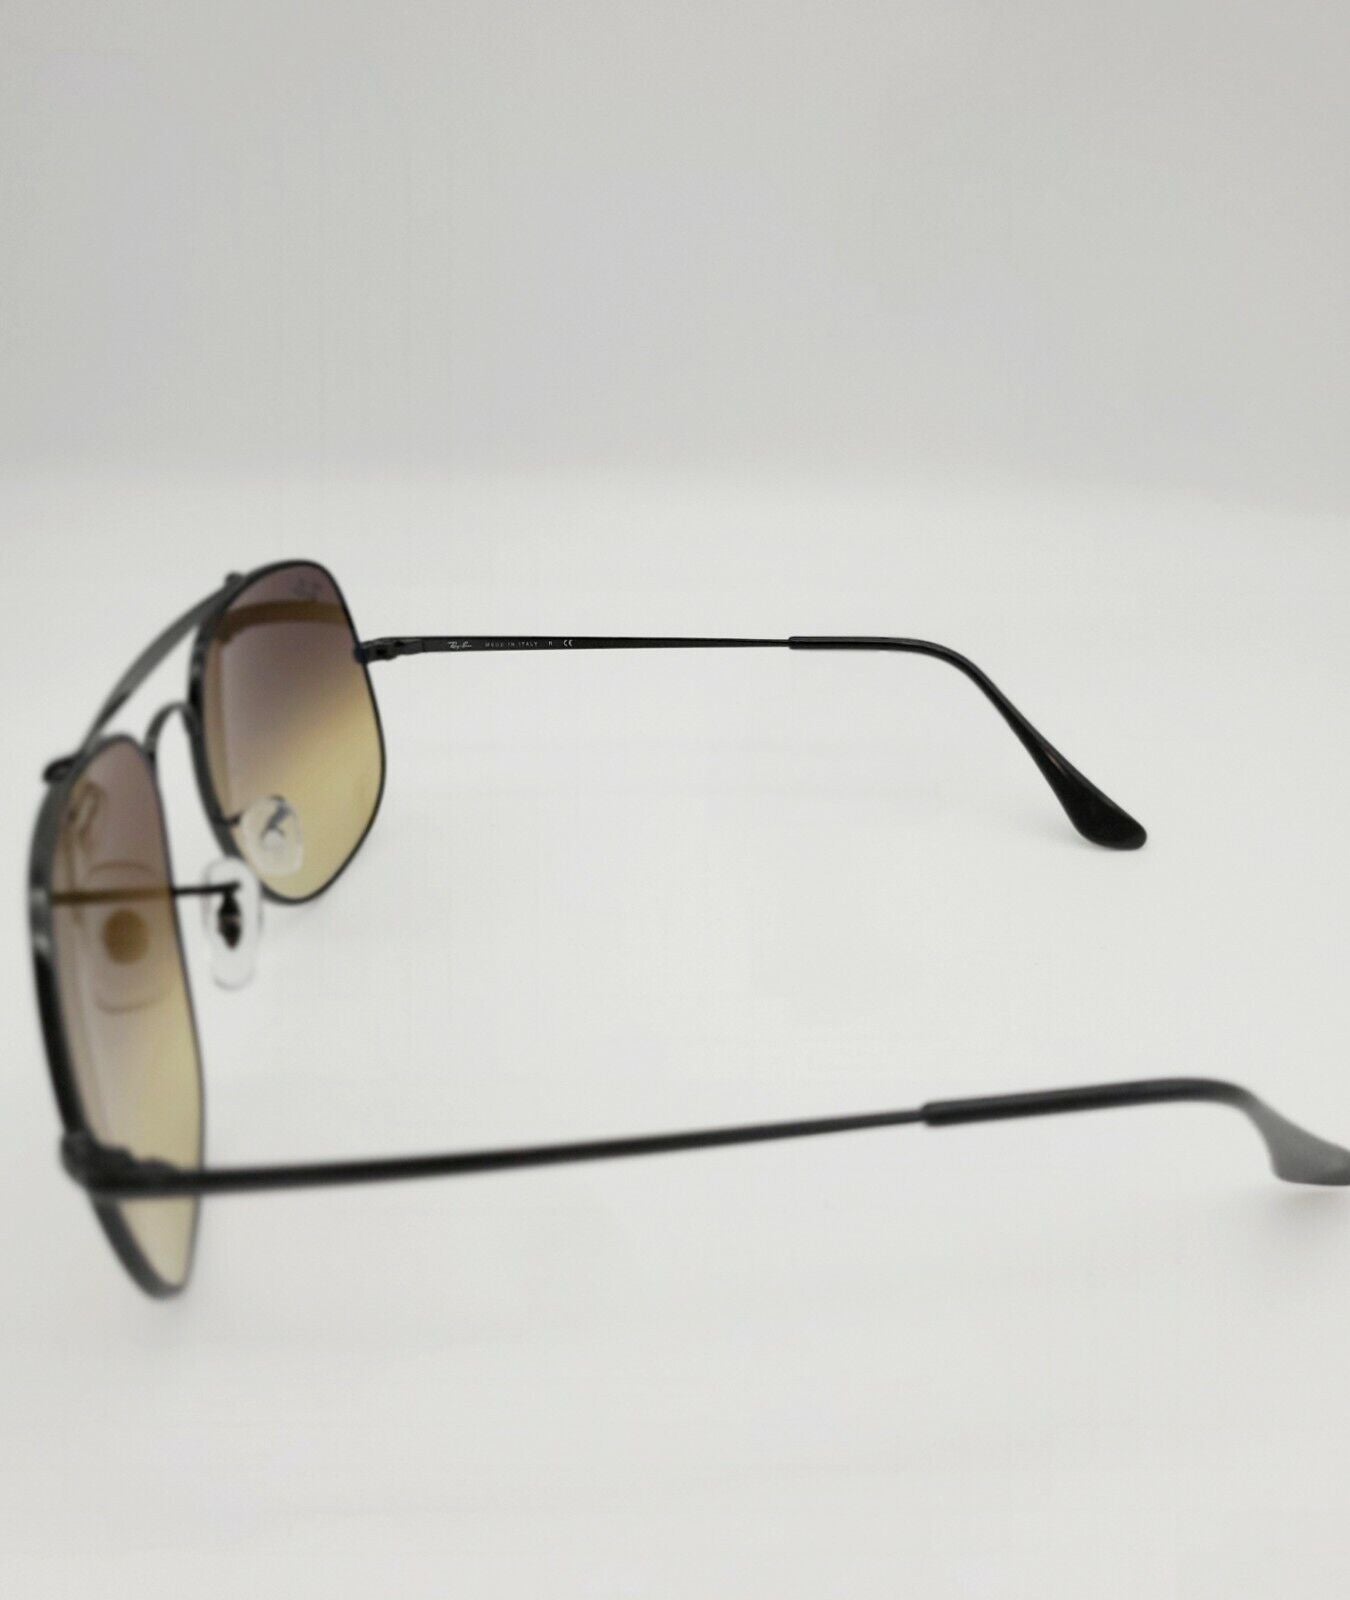 Ray Ban 0RB3561 GENERAL 002/9U Black/Silver Gradient Sunglasses